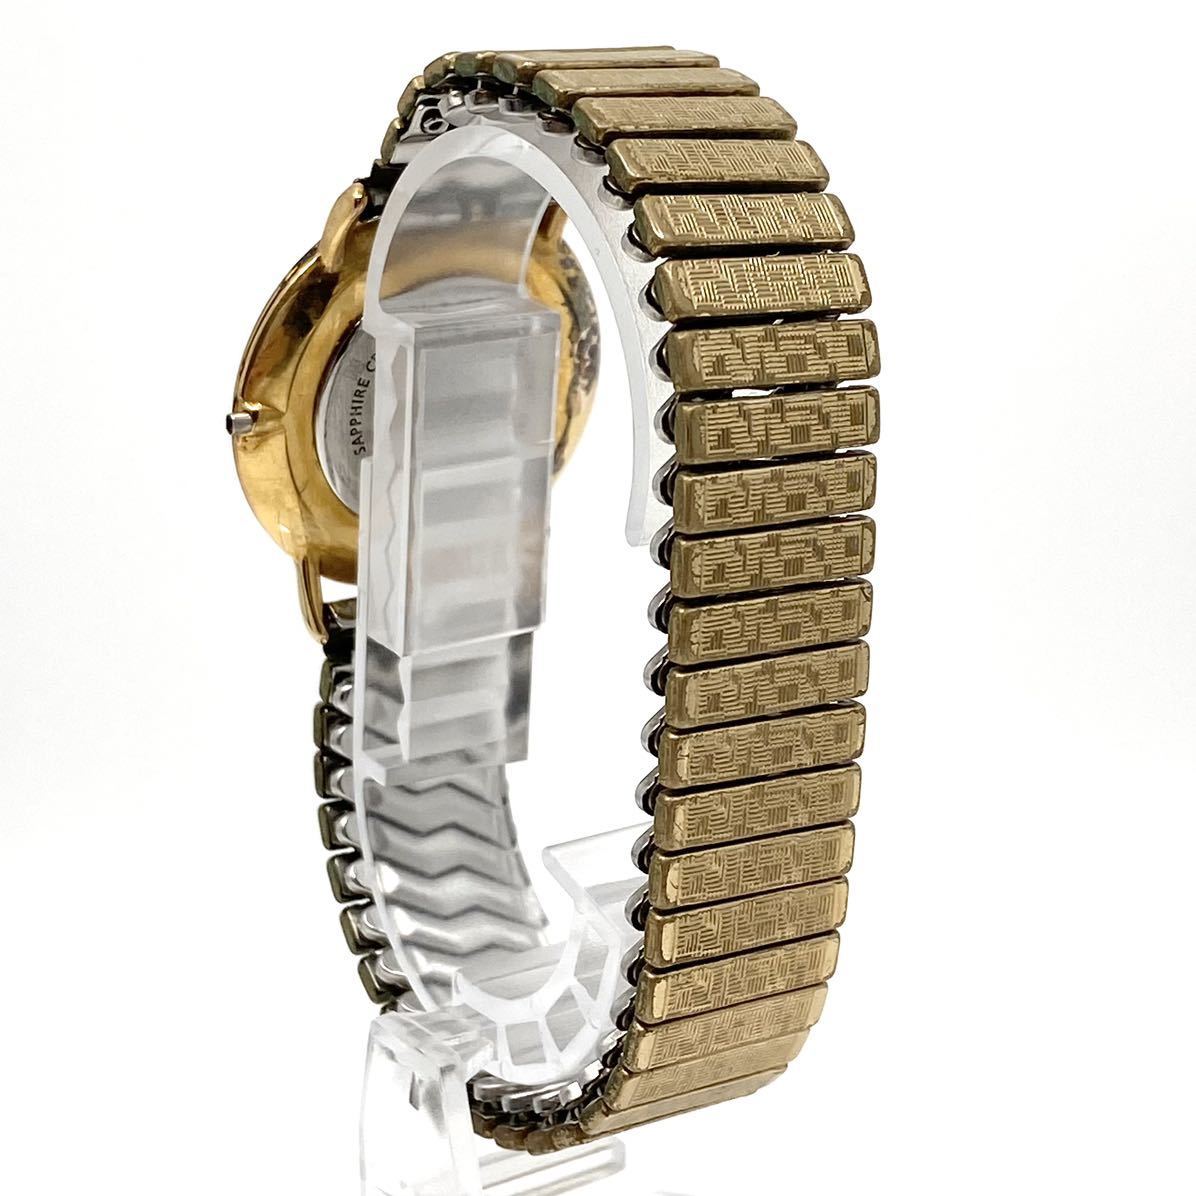 TISSOT 腕時計 蛇腹ベルト ローマンインデックス quartz クォーツ 2針 Swiss スイス製 ホワイト ゴールド 白 金 ティソ D46_画像5